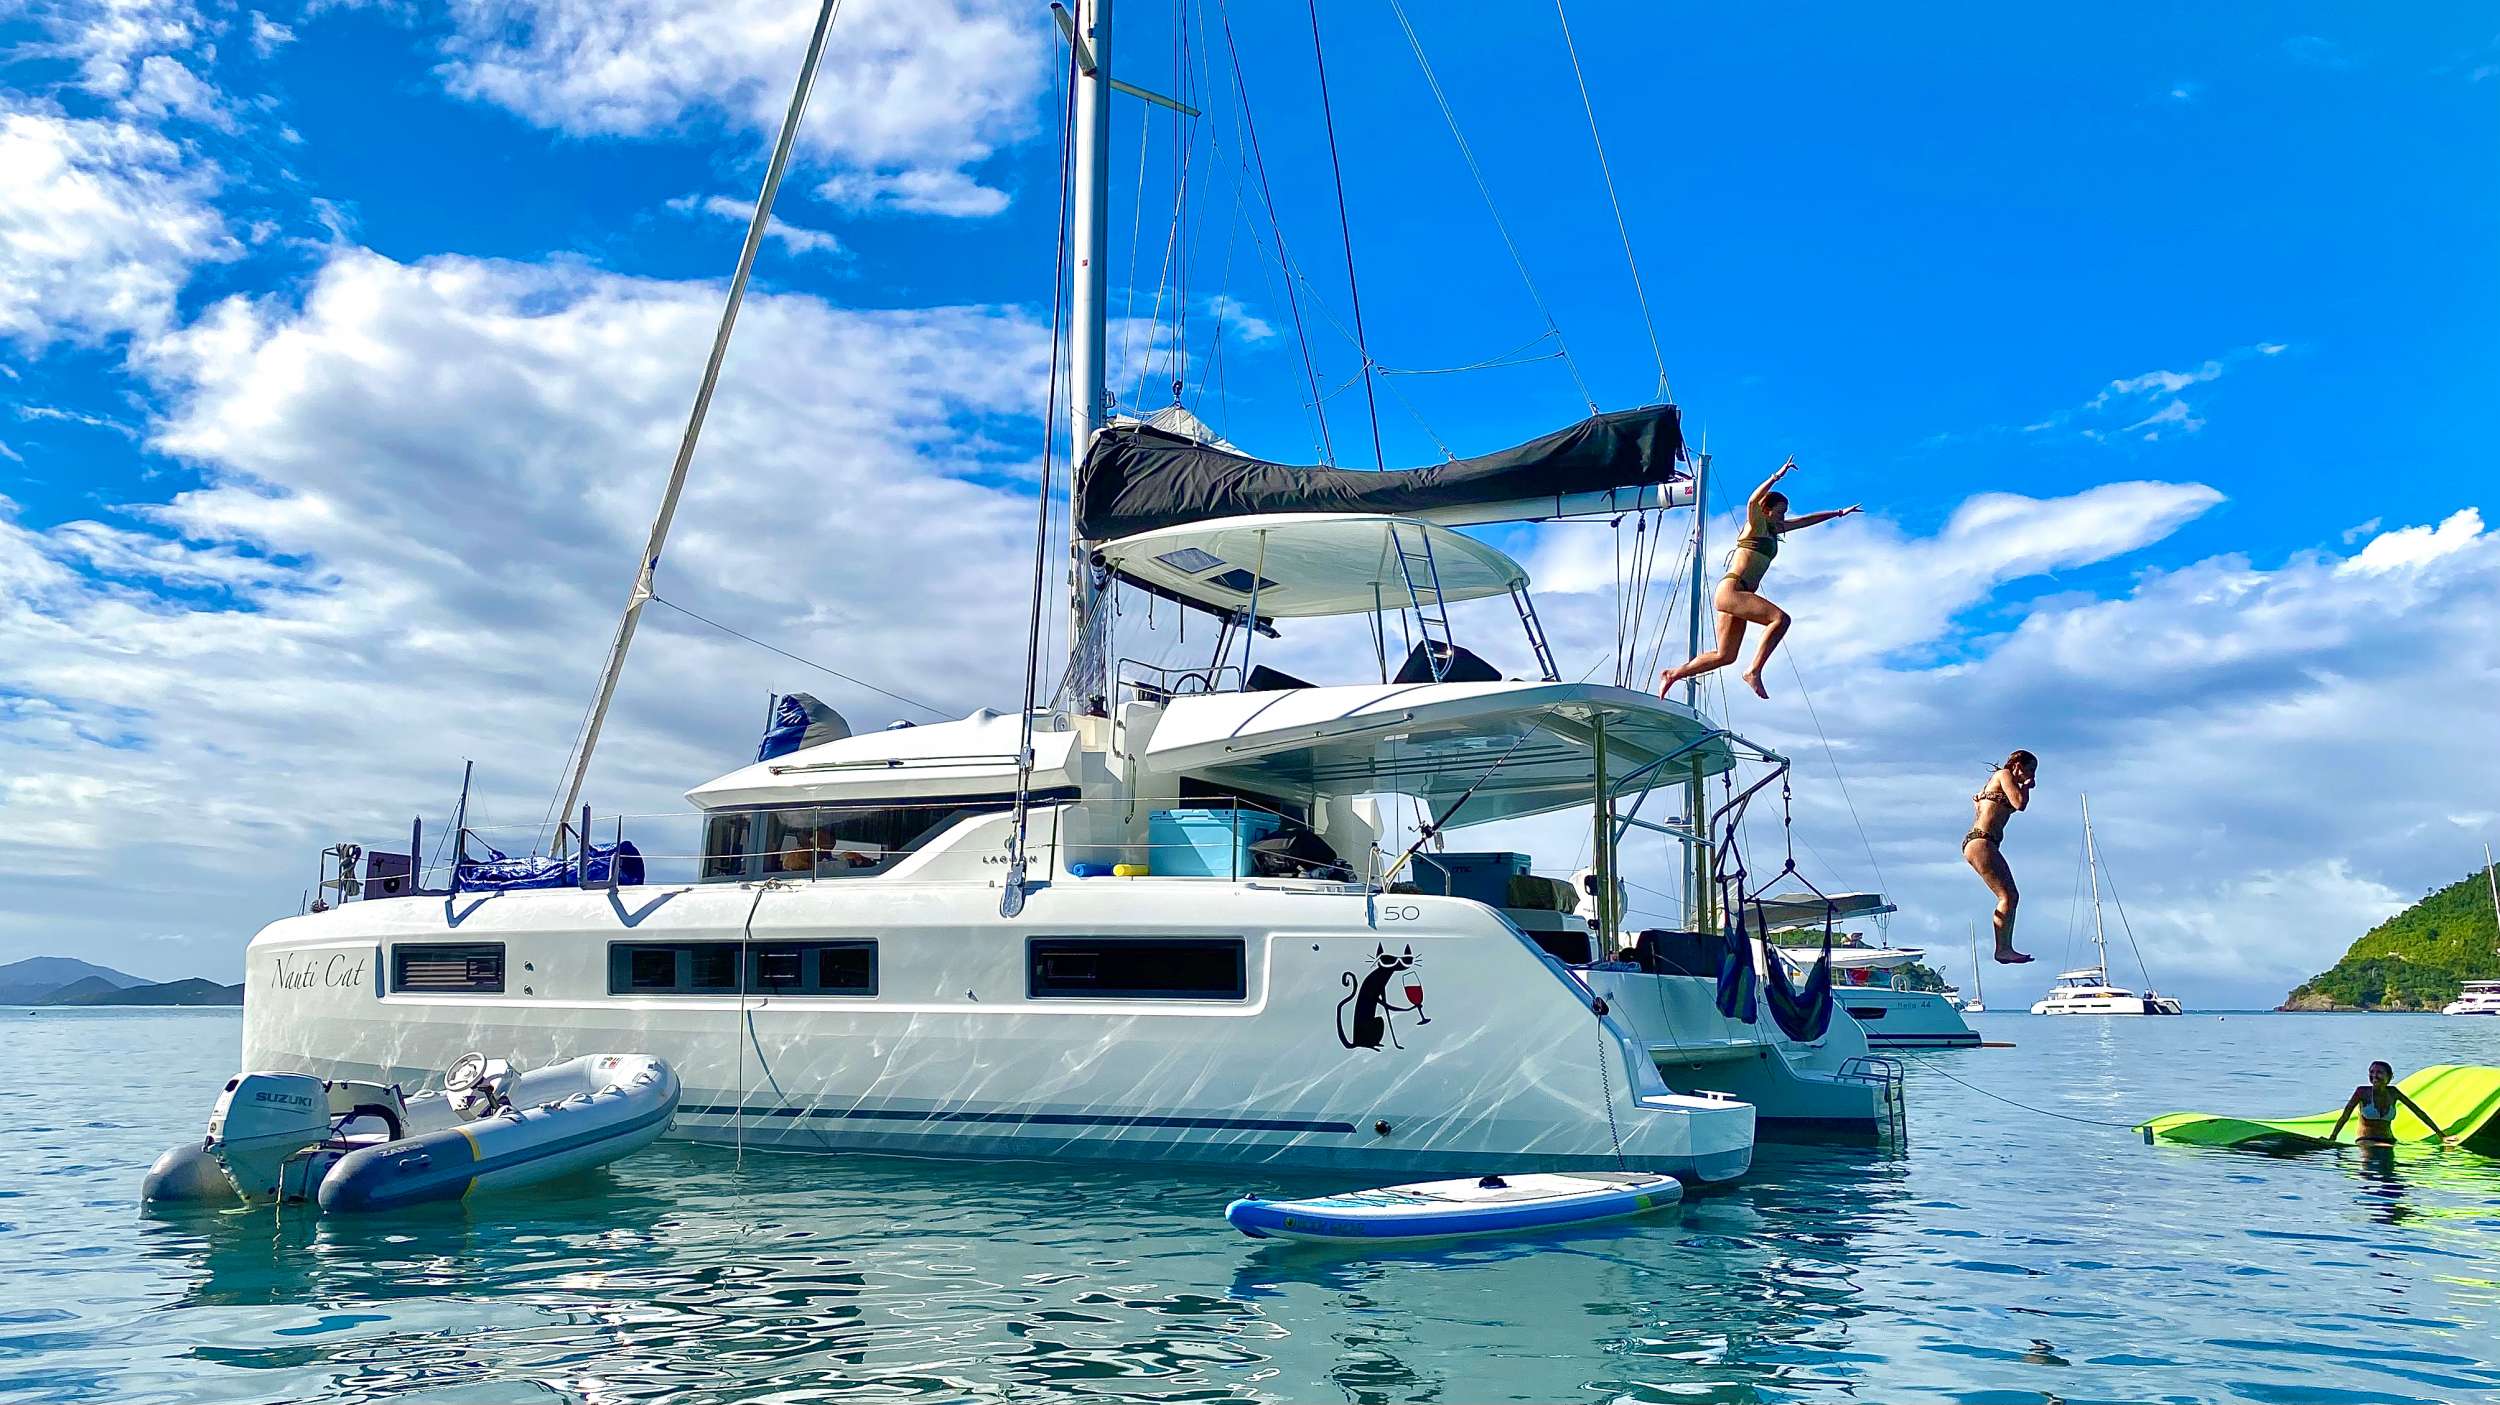 NAUTI CAT - Catamaran charter Nassau & Boat hire in Bahamas 1